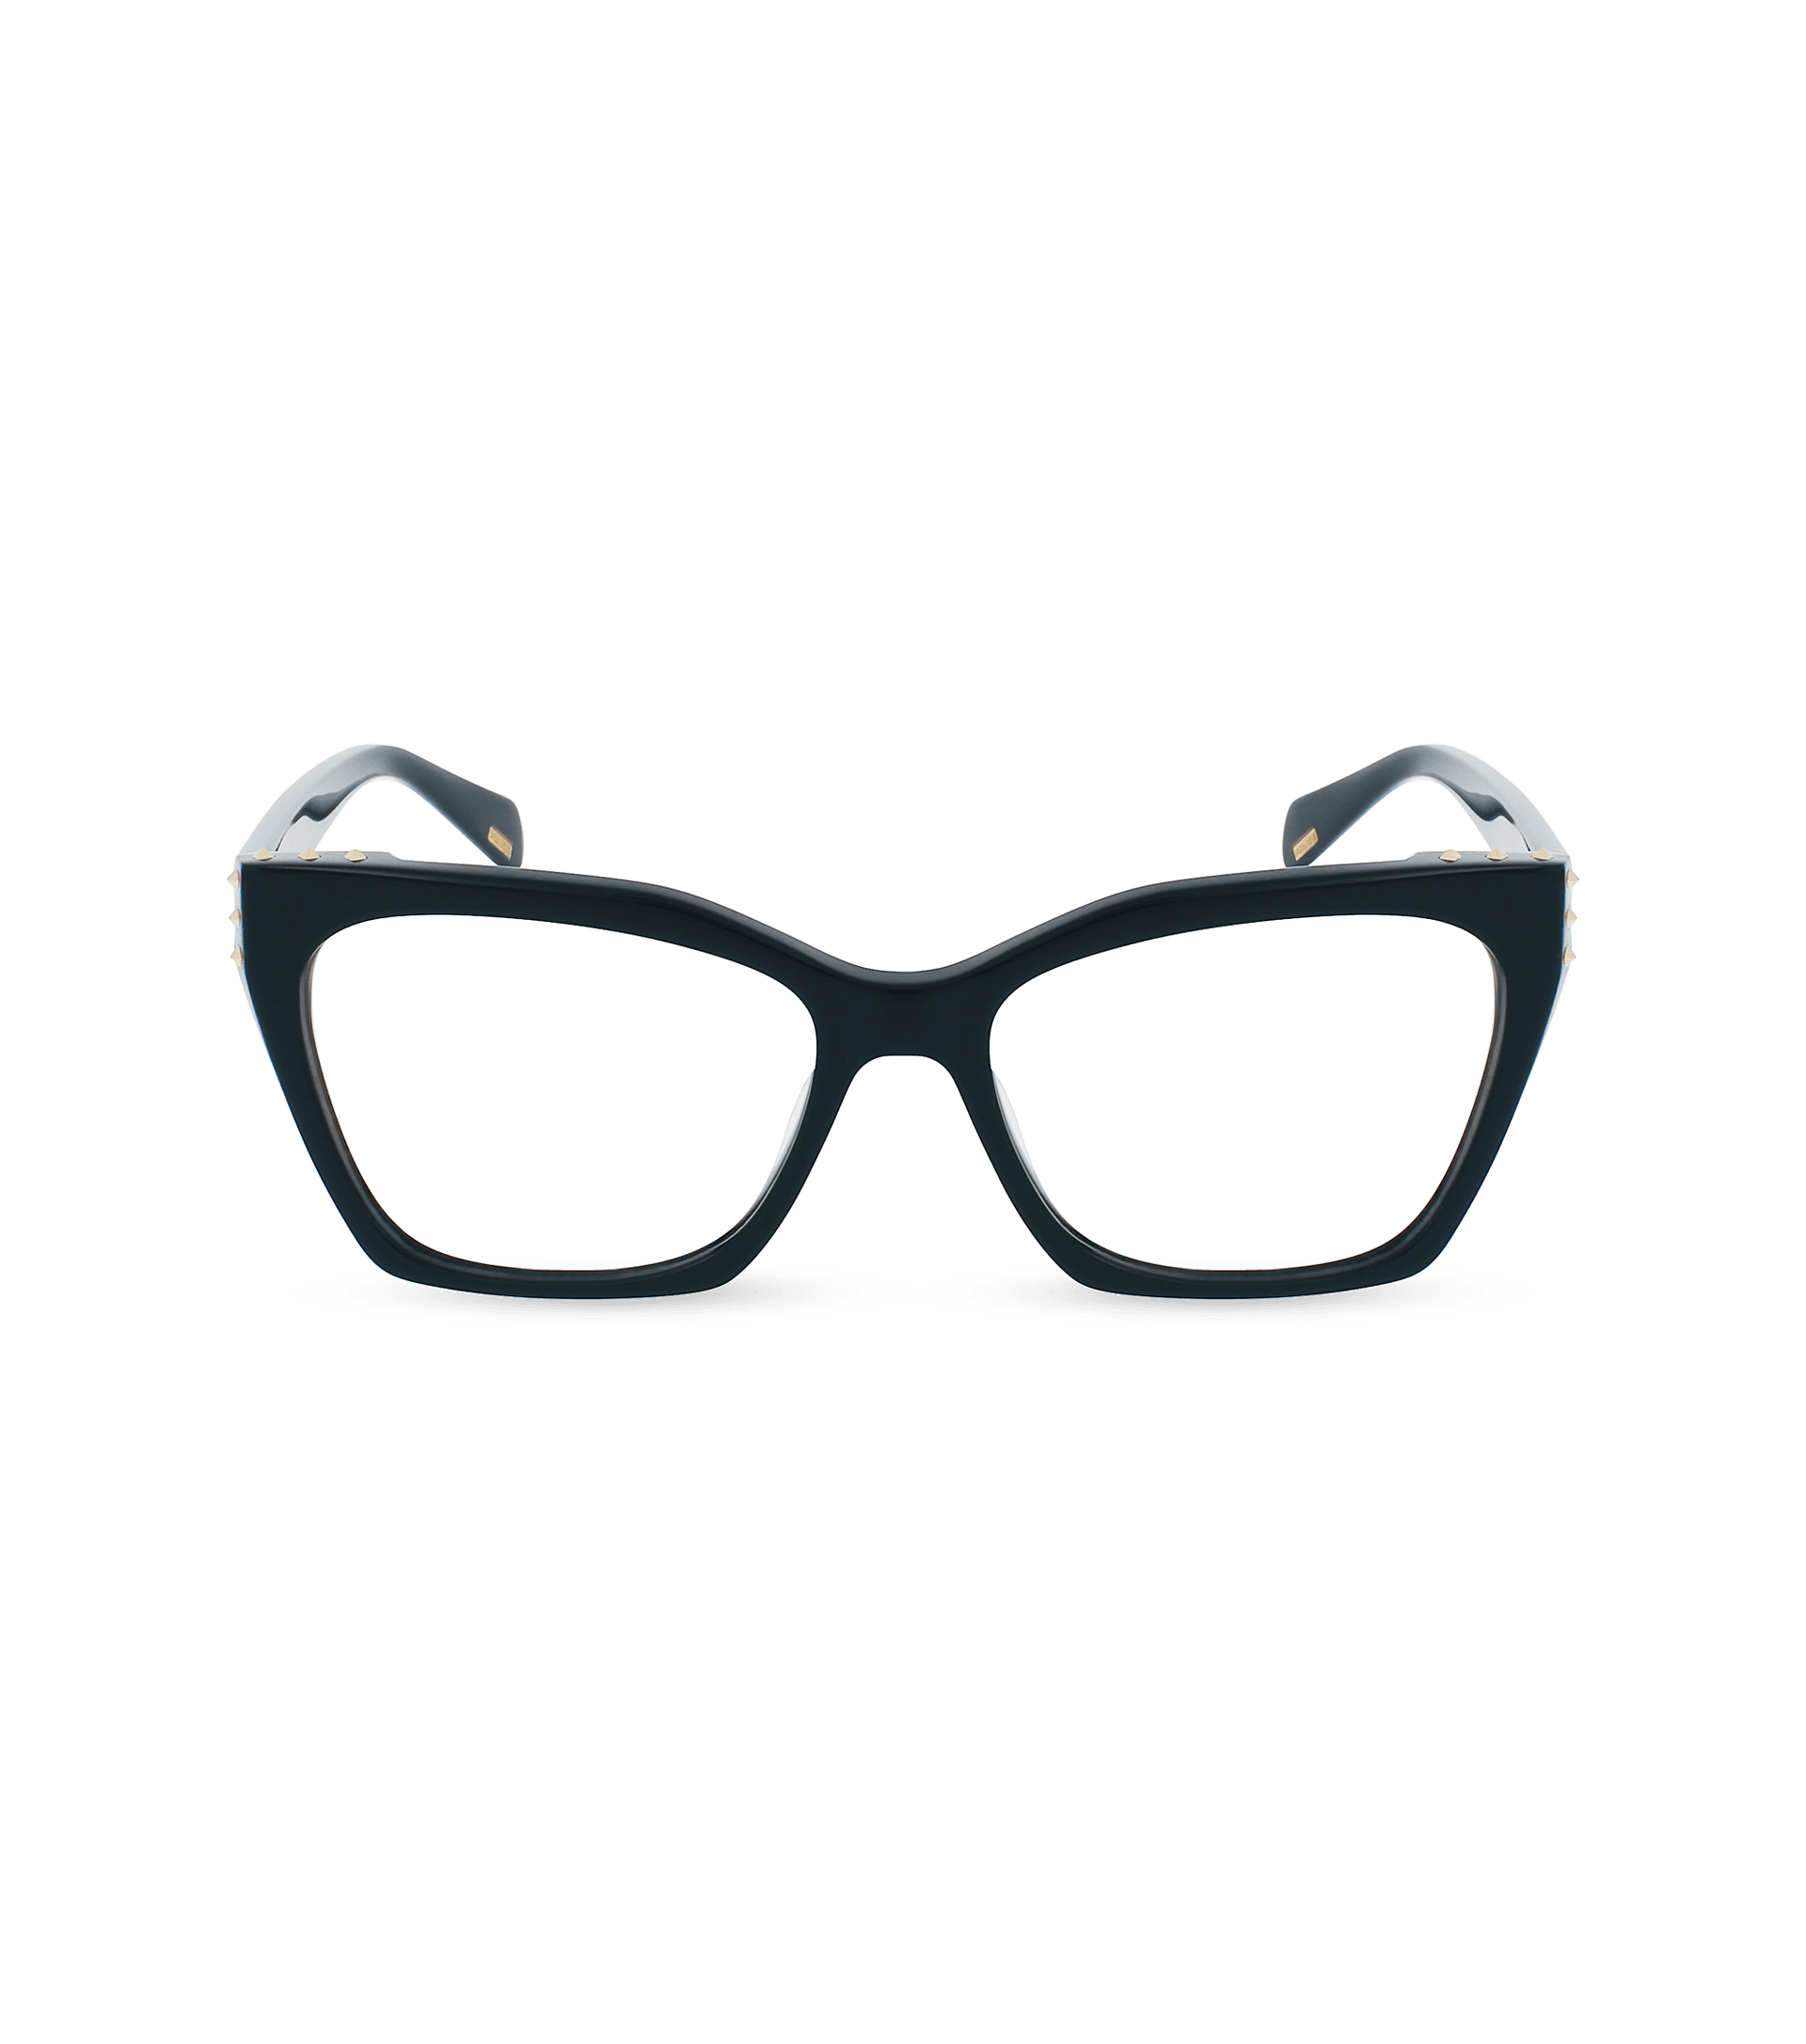 Police glasses - Superstar 1 Woman Eyeglasses Police VPLM04 Black